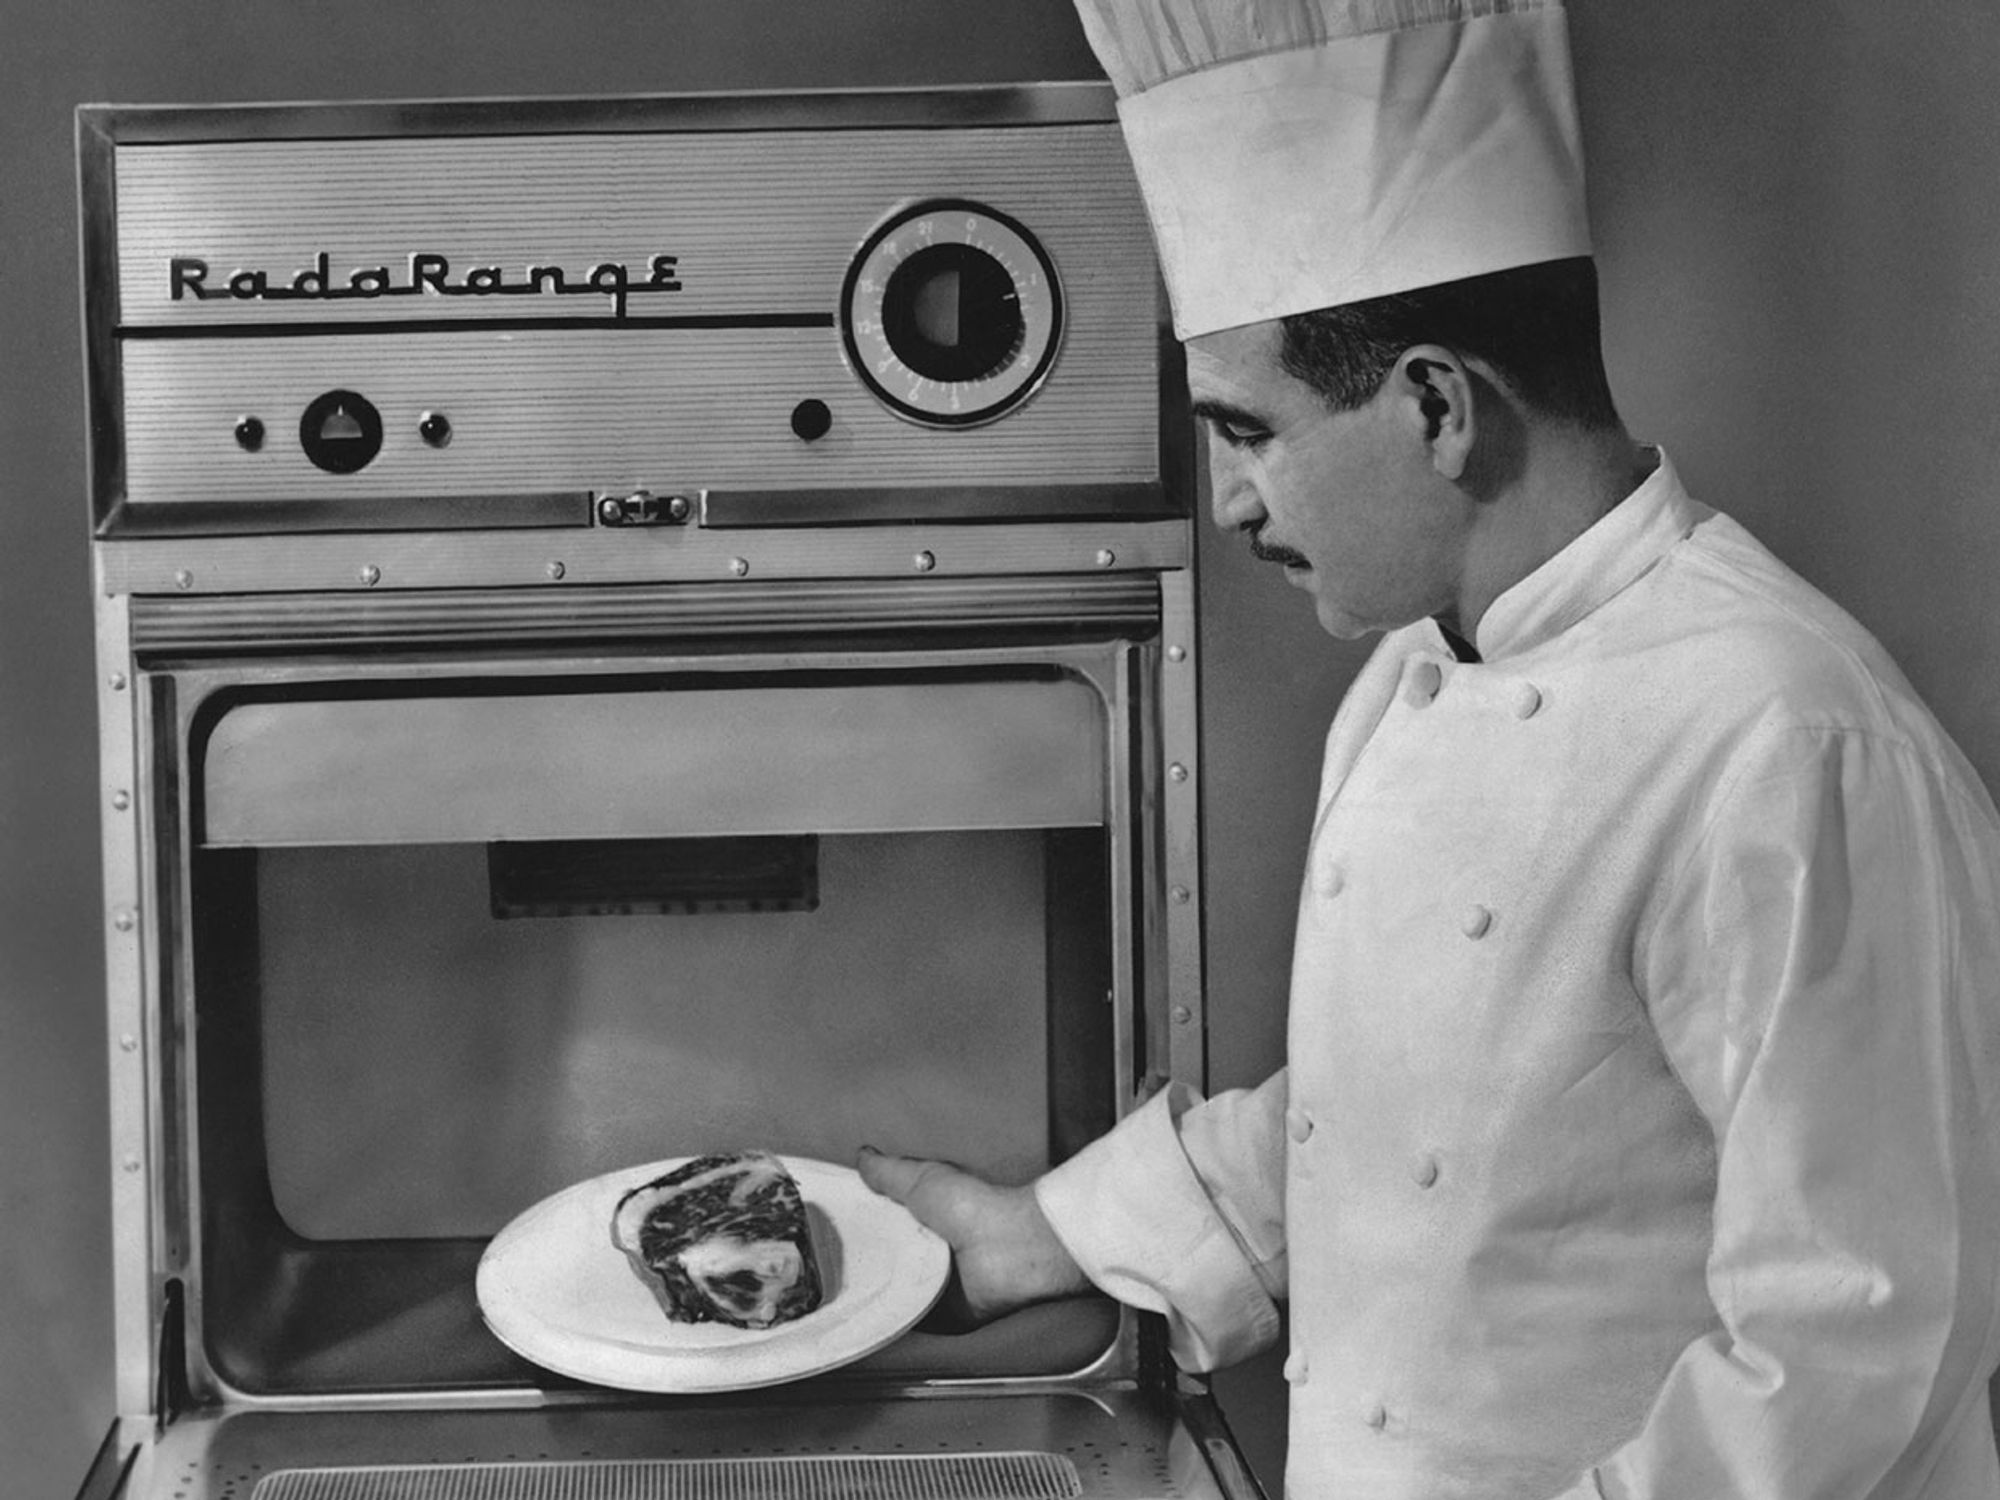 https://spectrum.ieee.org/media-library/raytheons-radarange-iii-microwave-oven-debuted-in-1955-and-was-sold-in-limited-quantities-to-restaurants.jpg?id=25588014&width=2000&height=1500&coordinates=0%2C0%2C0%2C0